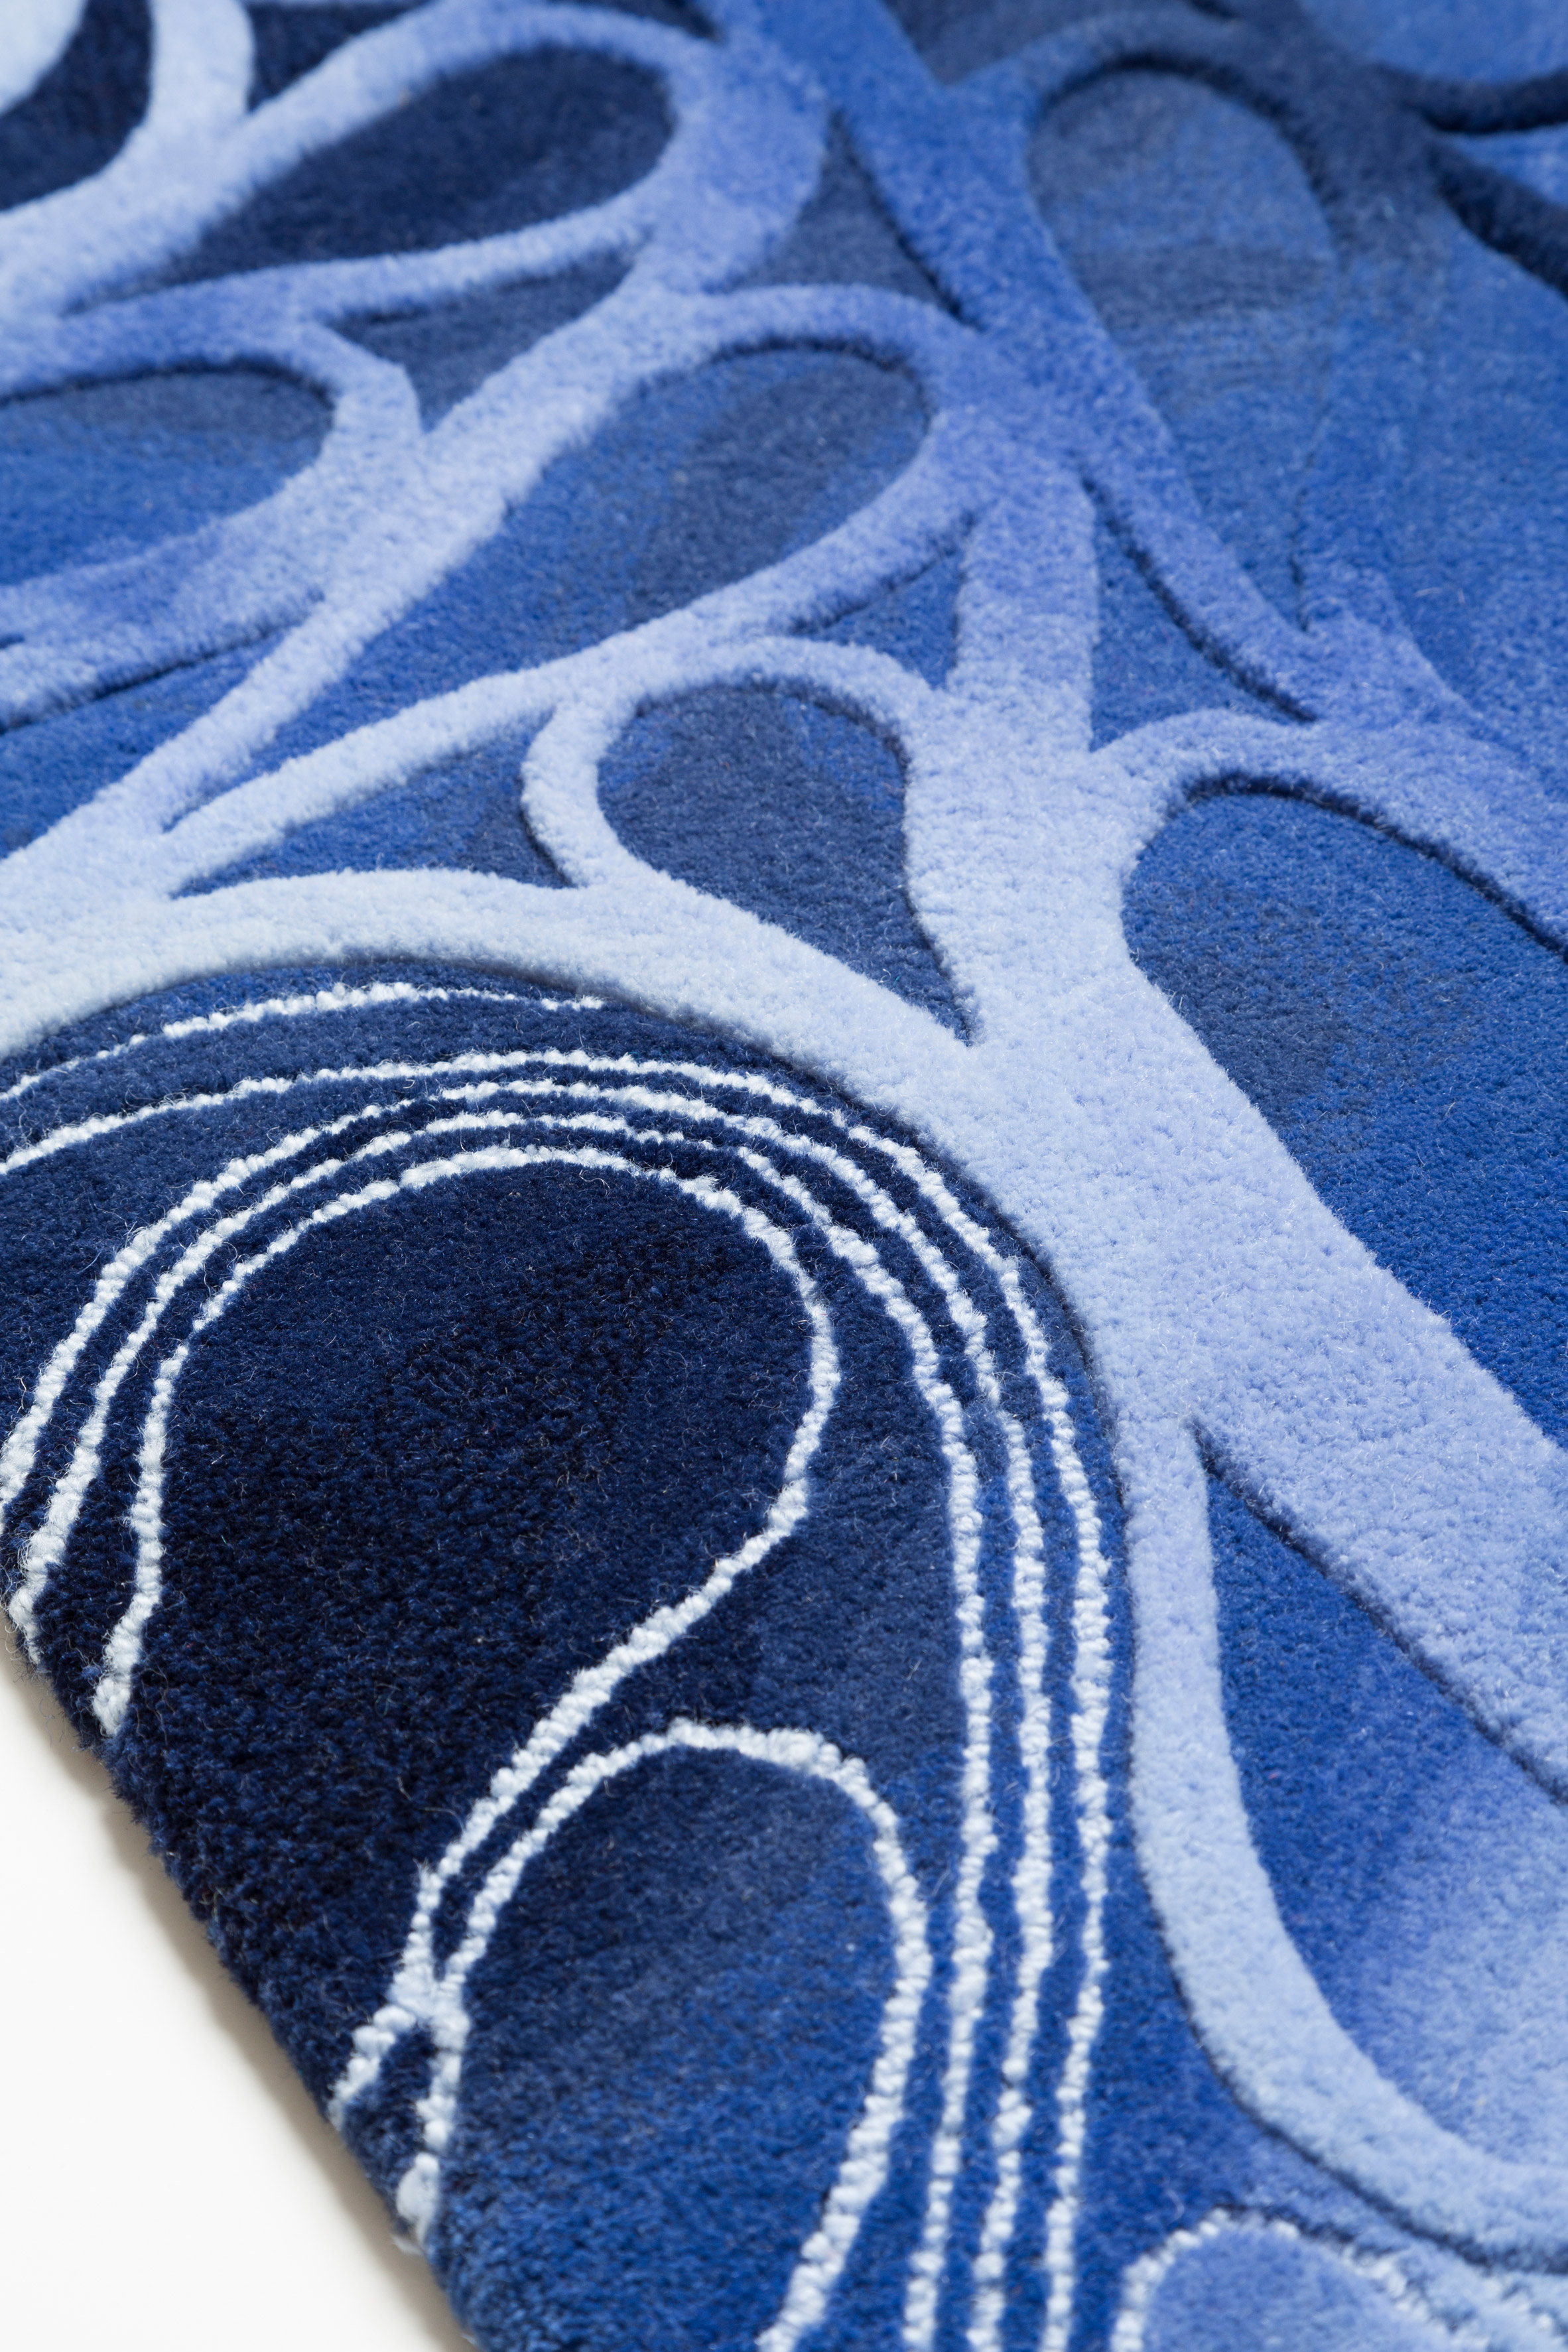 Zaha Hadid's distinctive architecture is translated into carpet designs